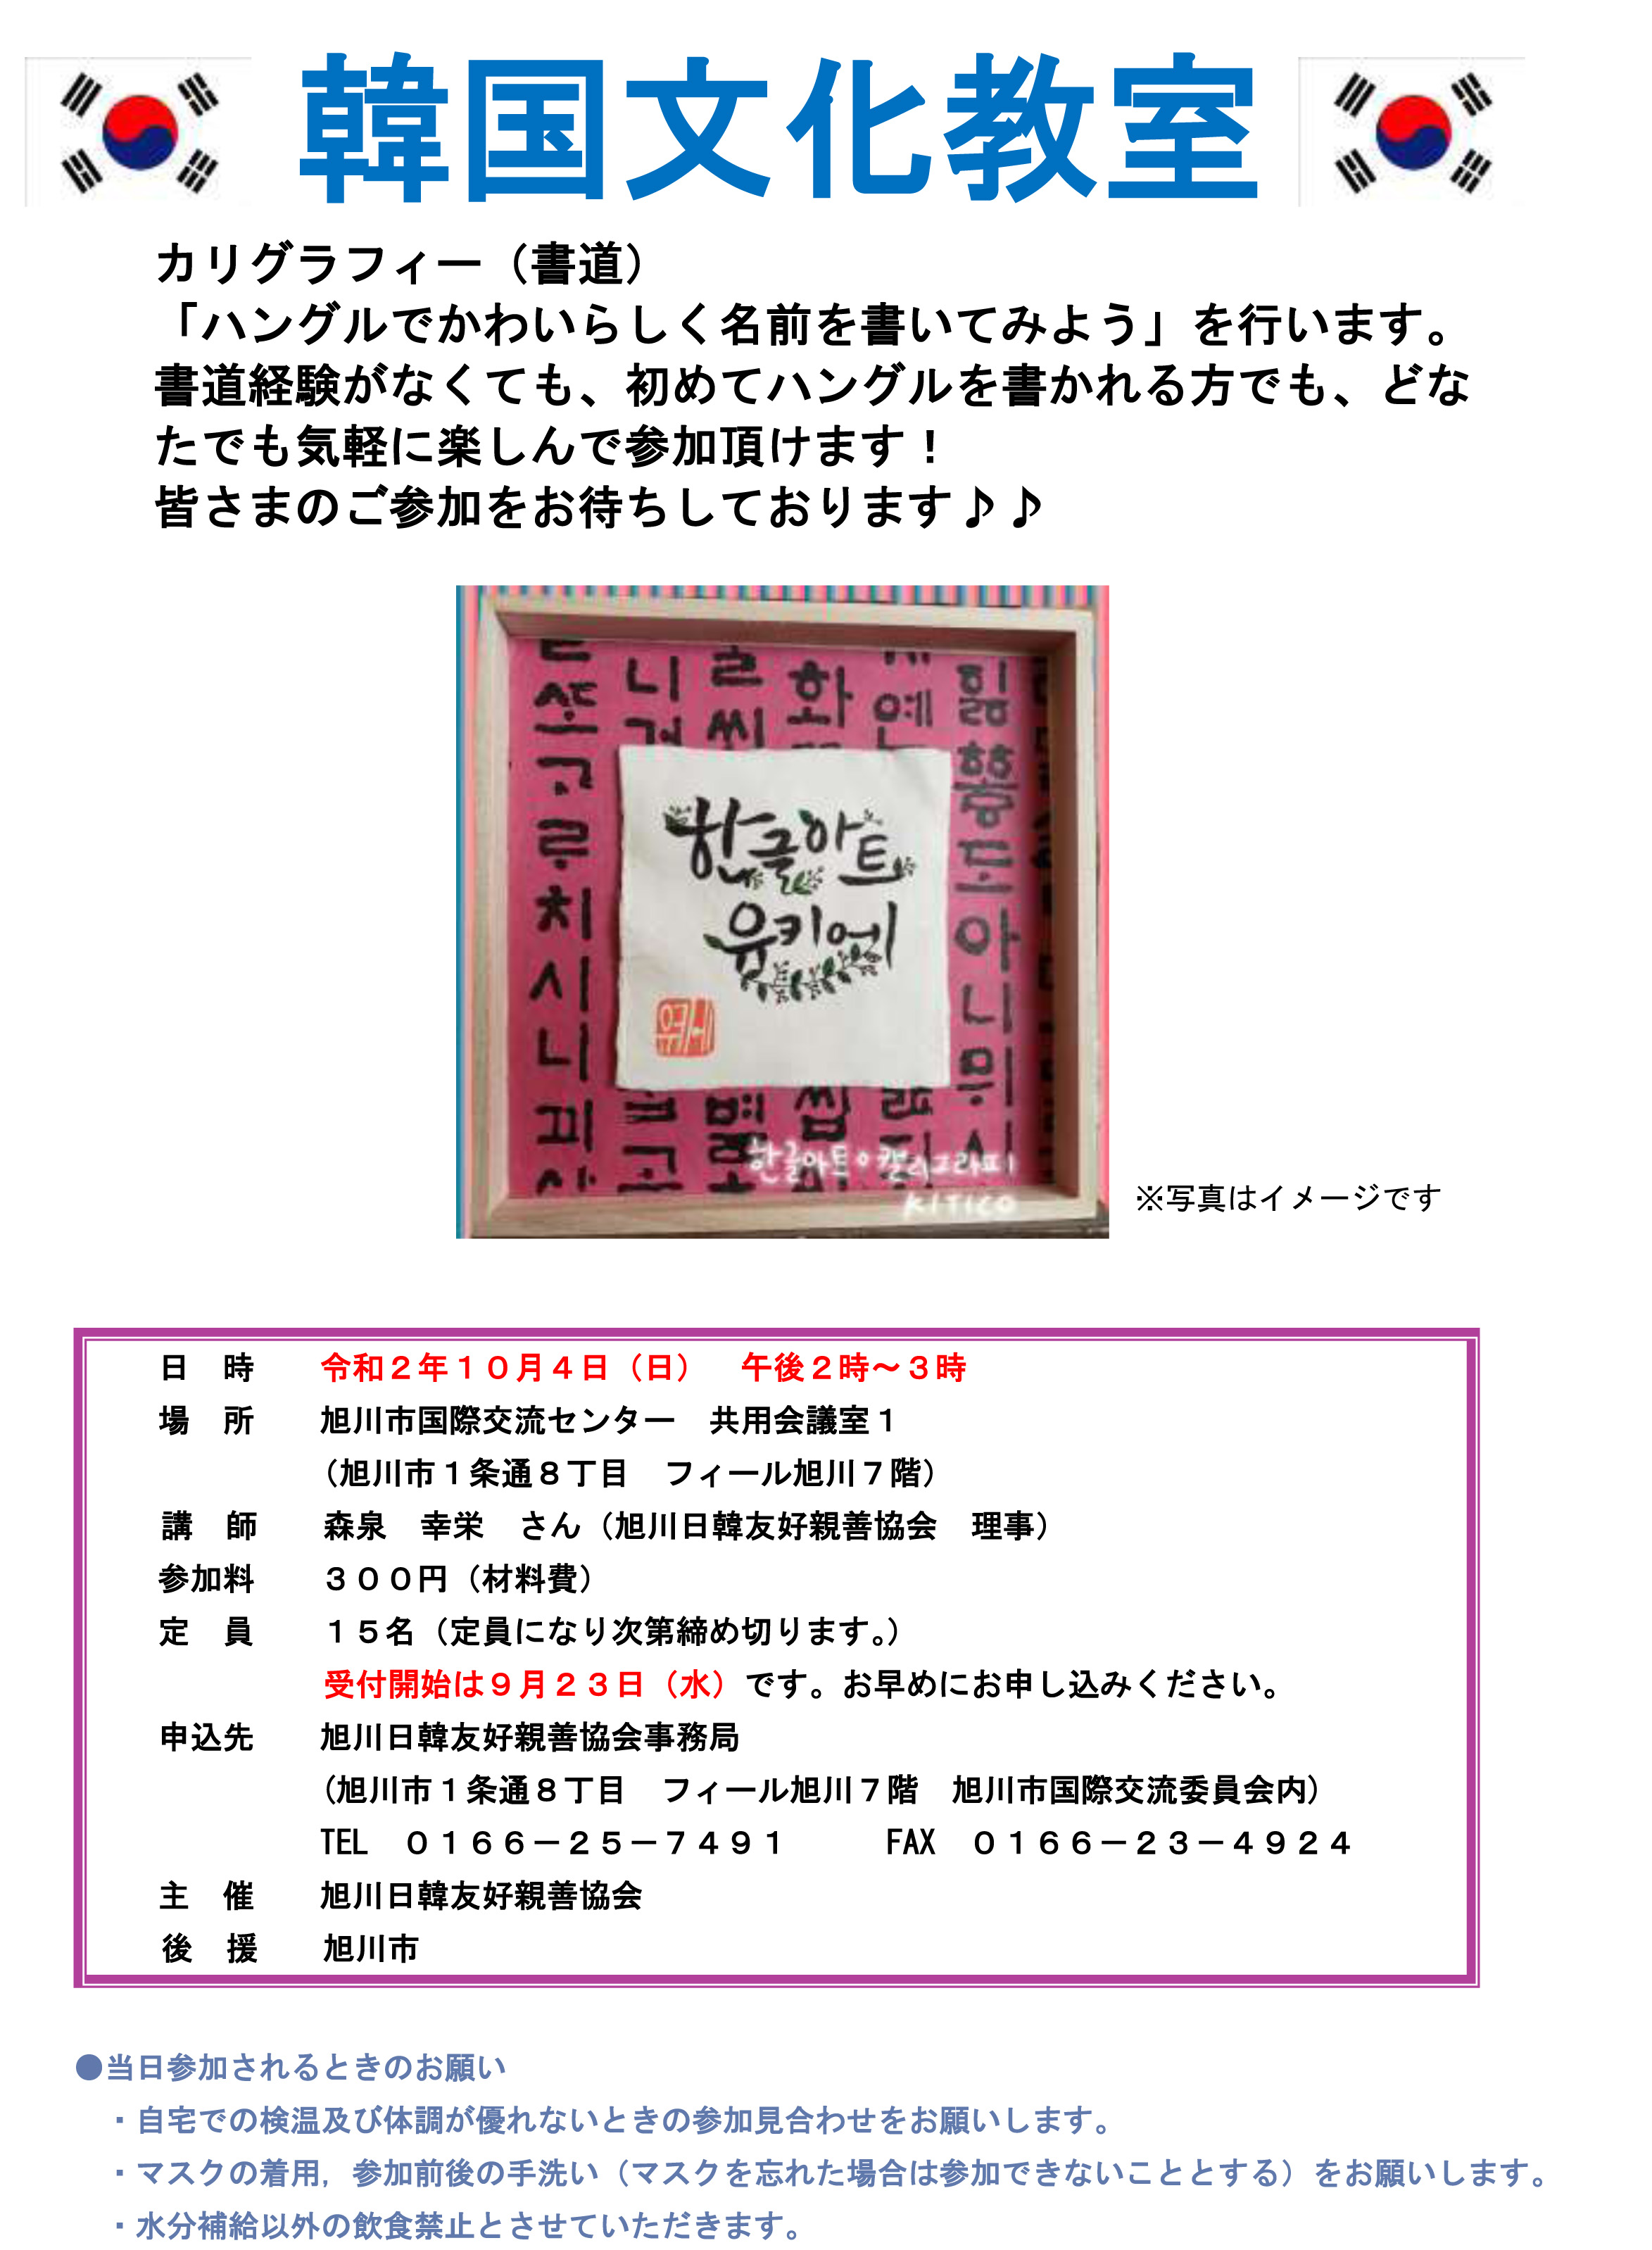 http://asahikawaic.jp/information/images/calligraphy.jpg